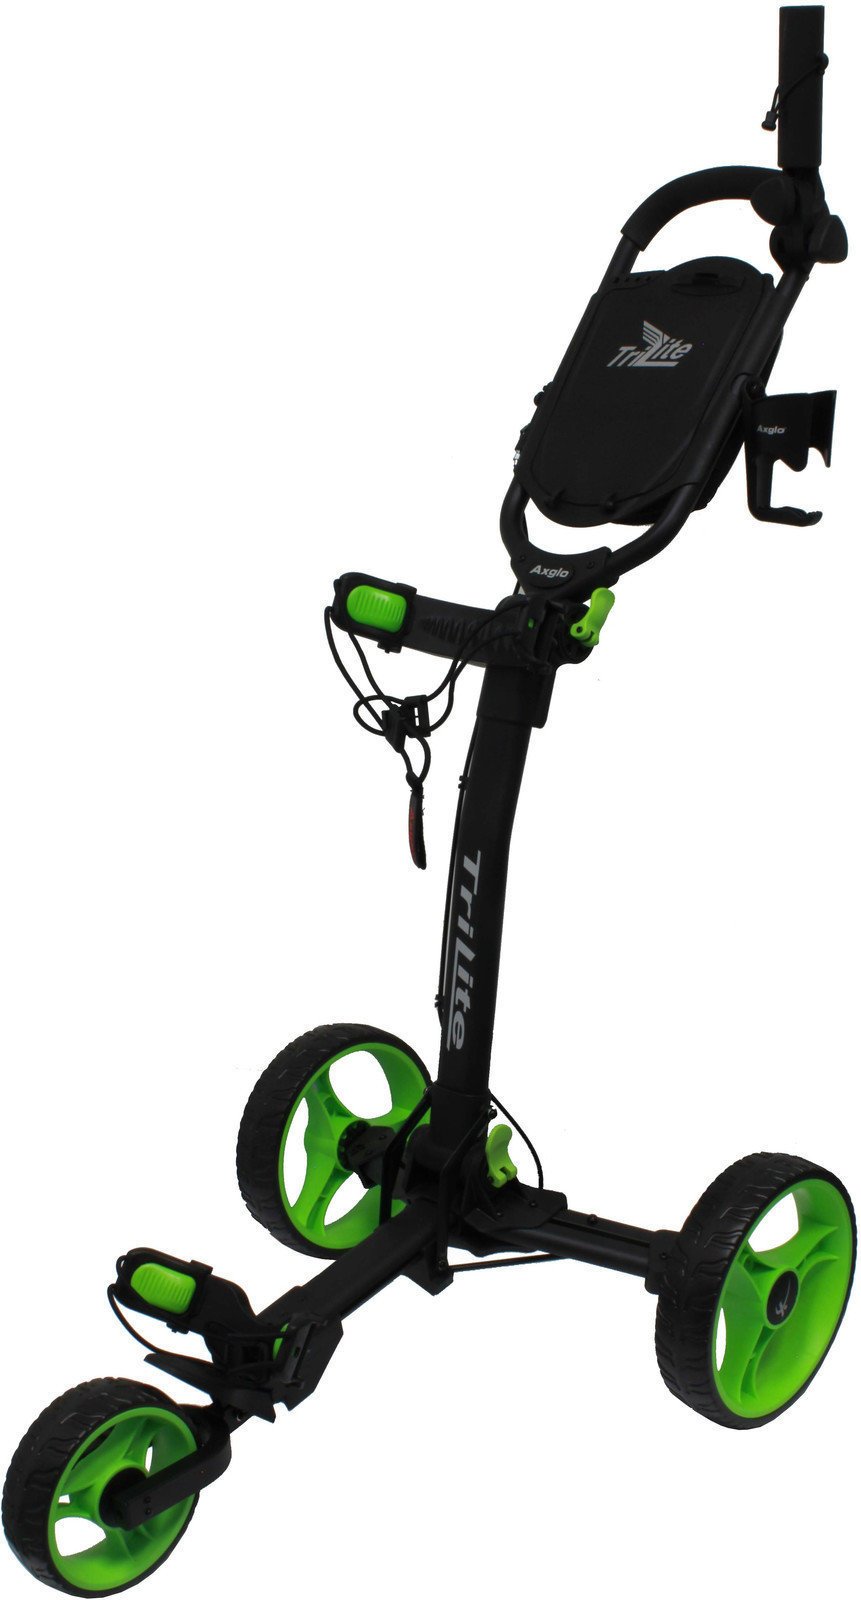 Chariot de golf manuel Axglo TriLite Black/Green Chariot de golf manuel